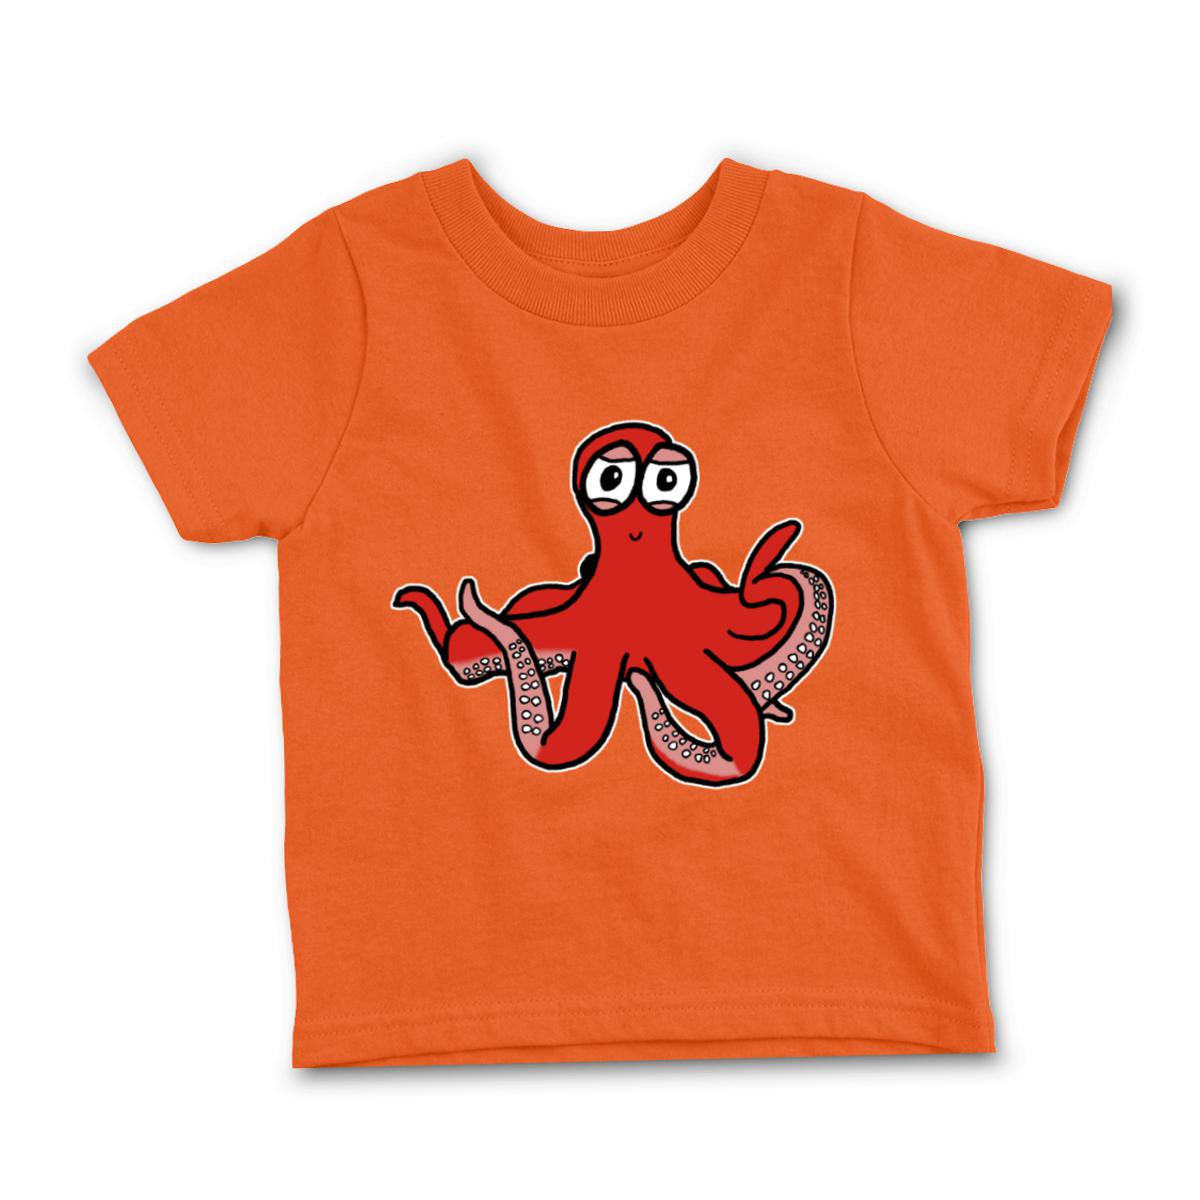 Octopus Infant Tee 24M orange